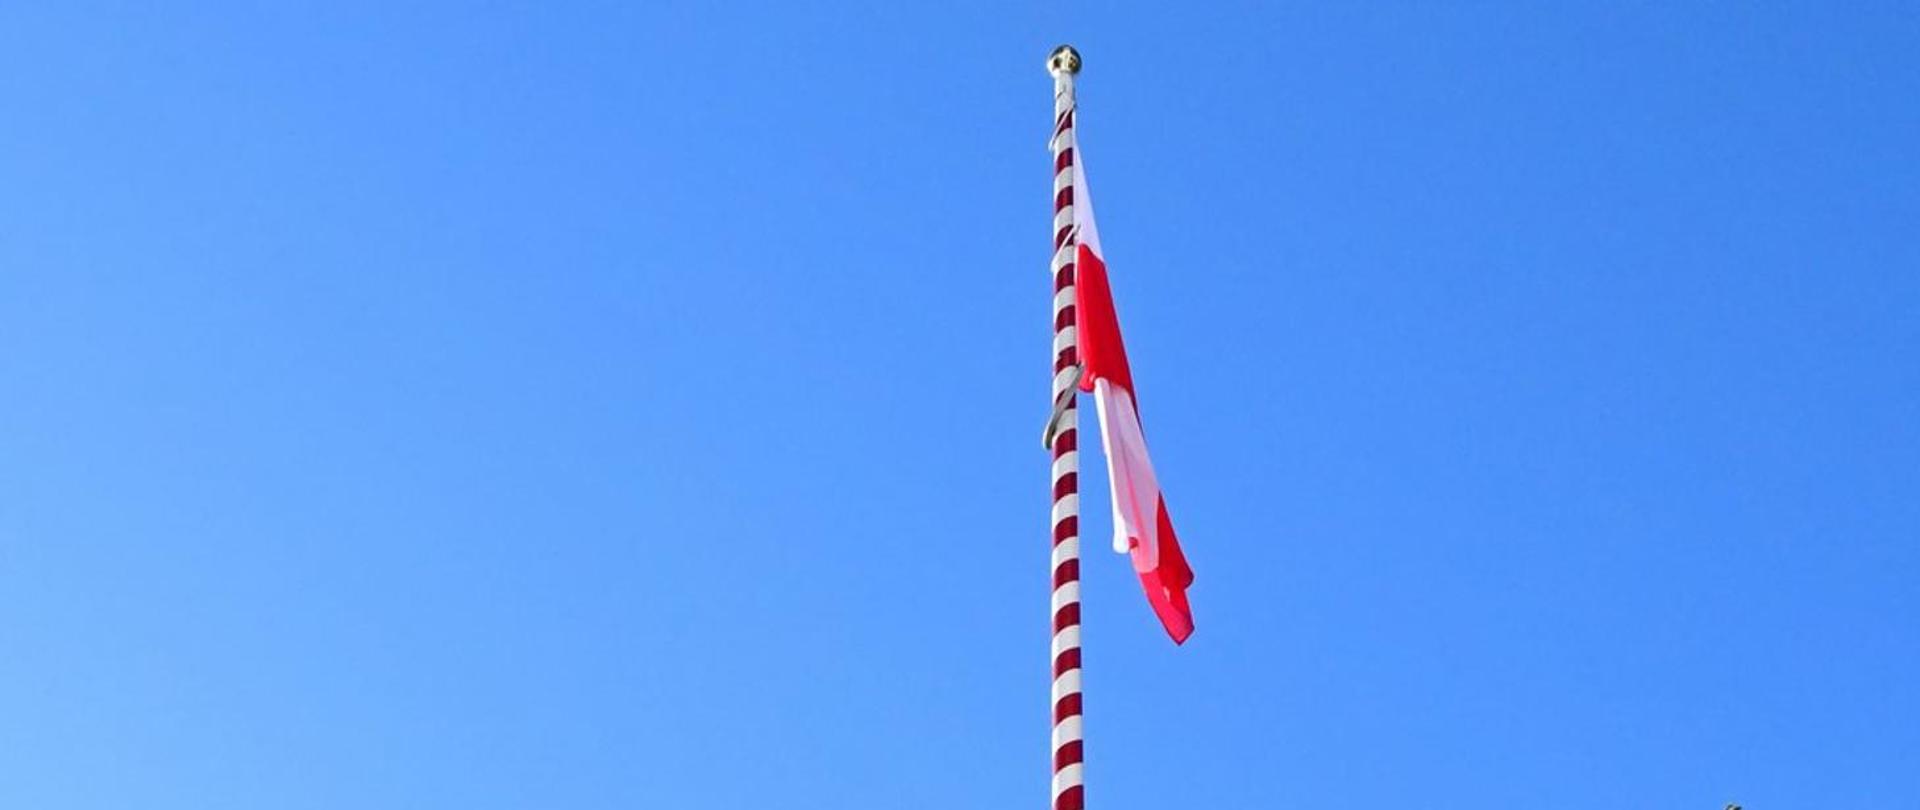 Flaga Polski wisi na maszcie.